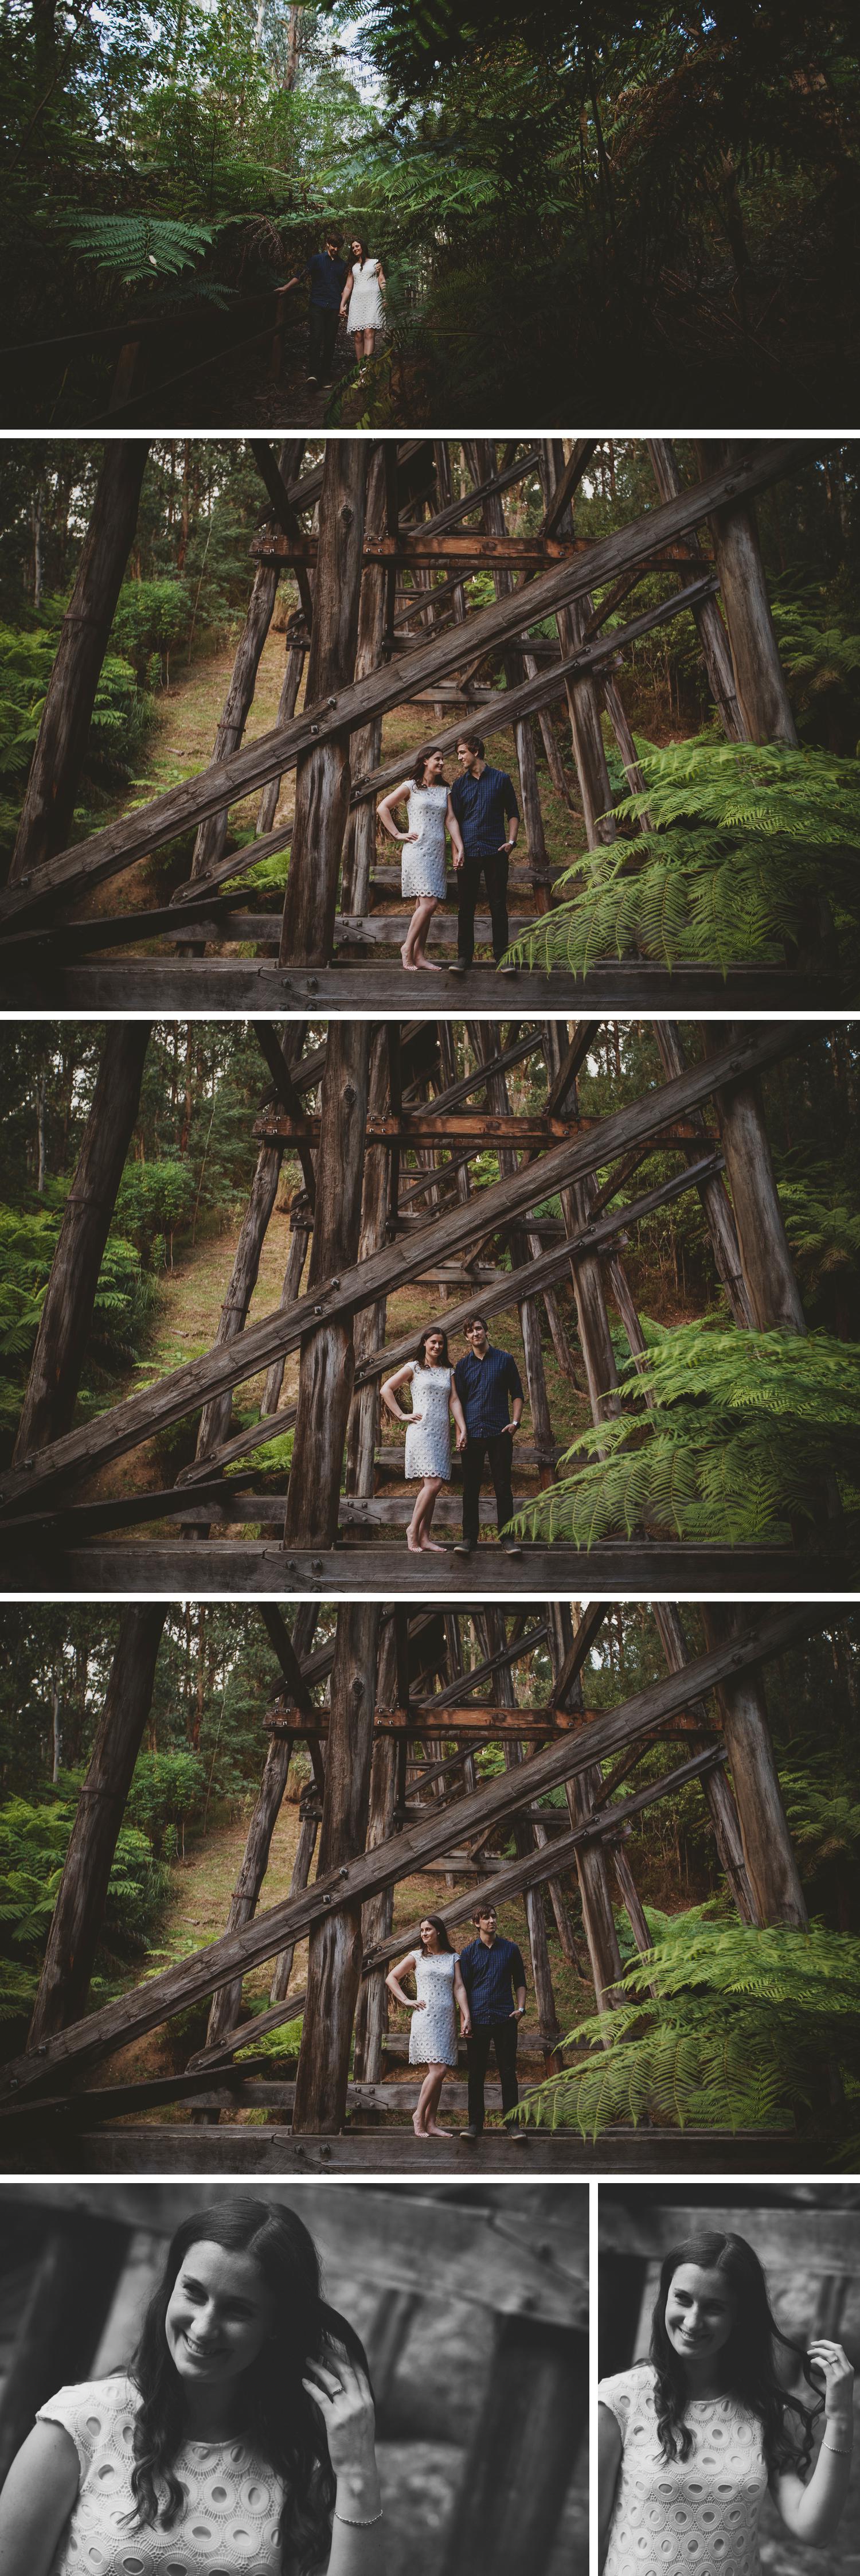 Noojee Tressle Bridge Photos, Engagement Shoot Noojee Victoria, Rainforest Shoot by Danae Studios